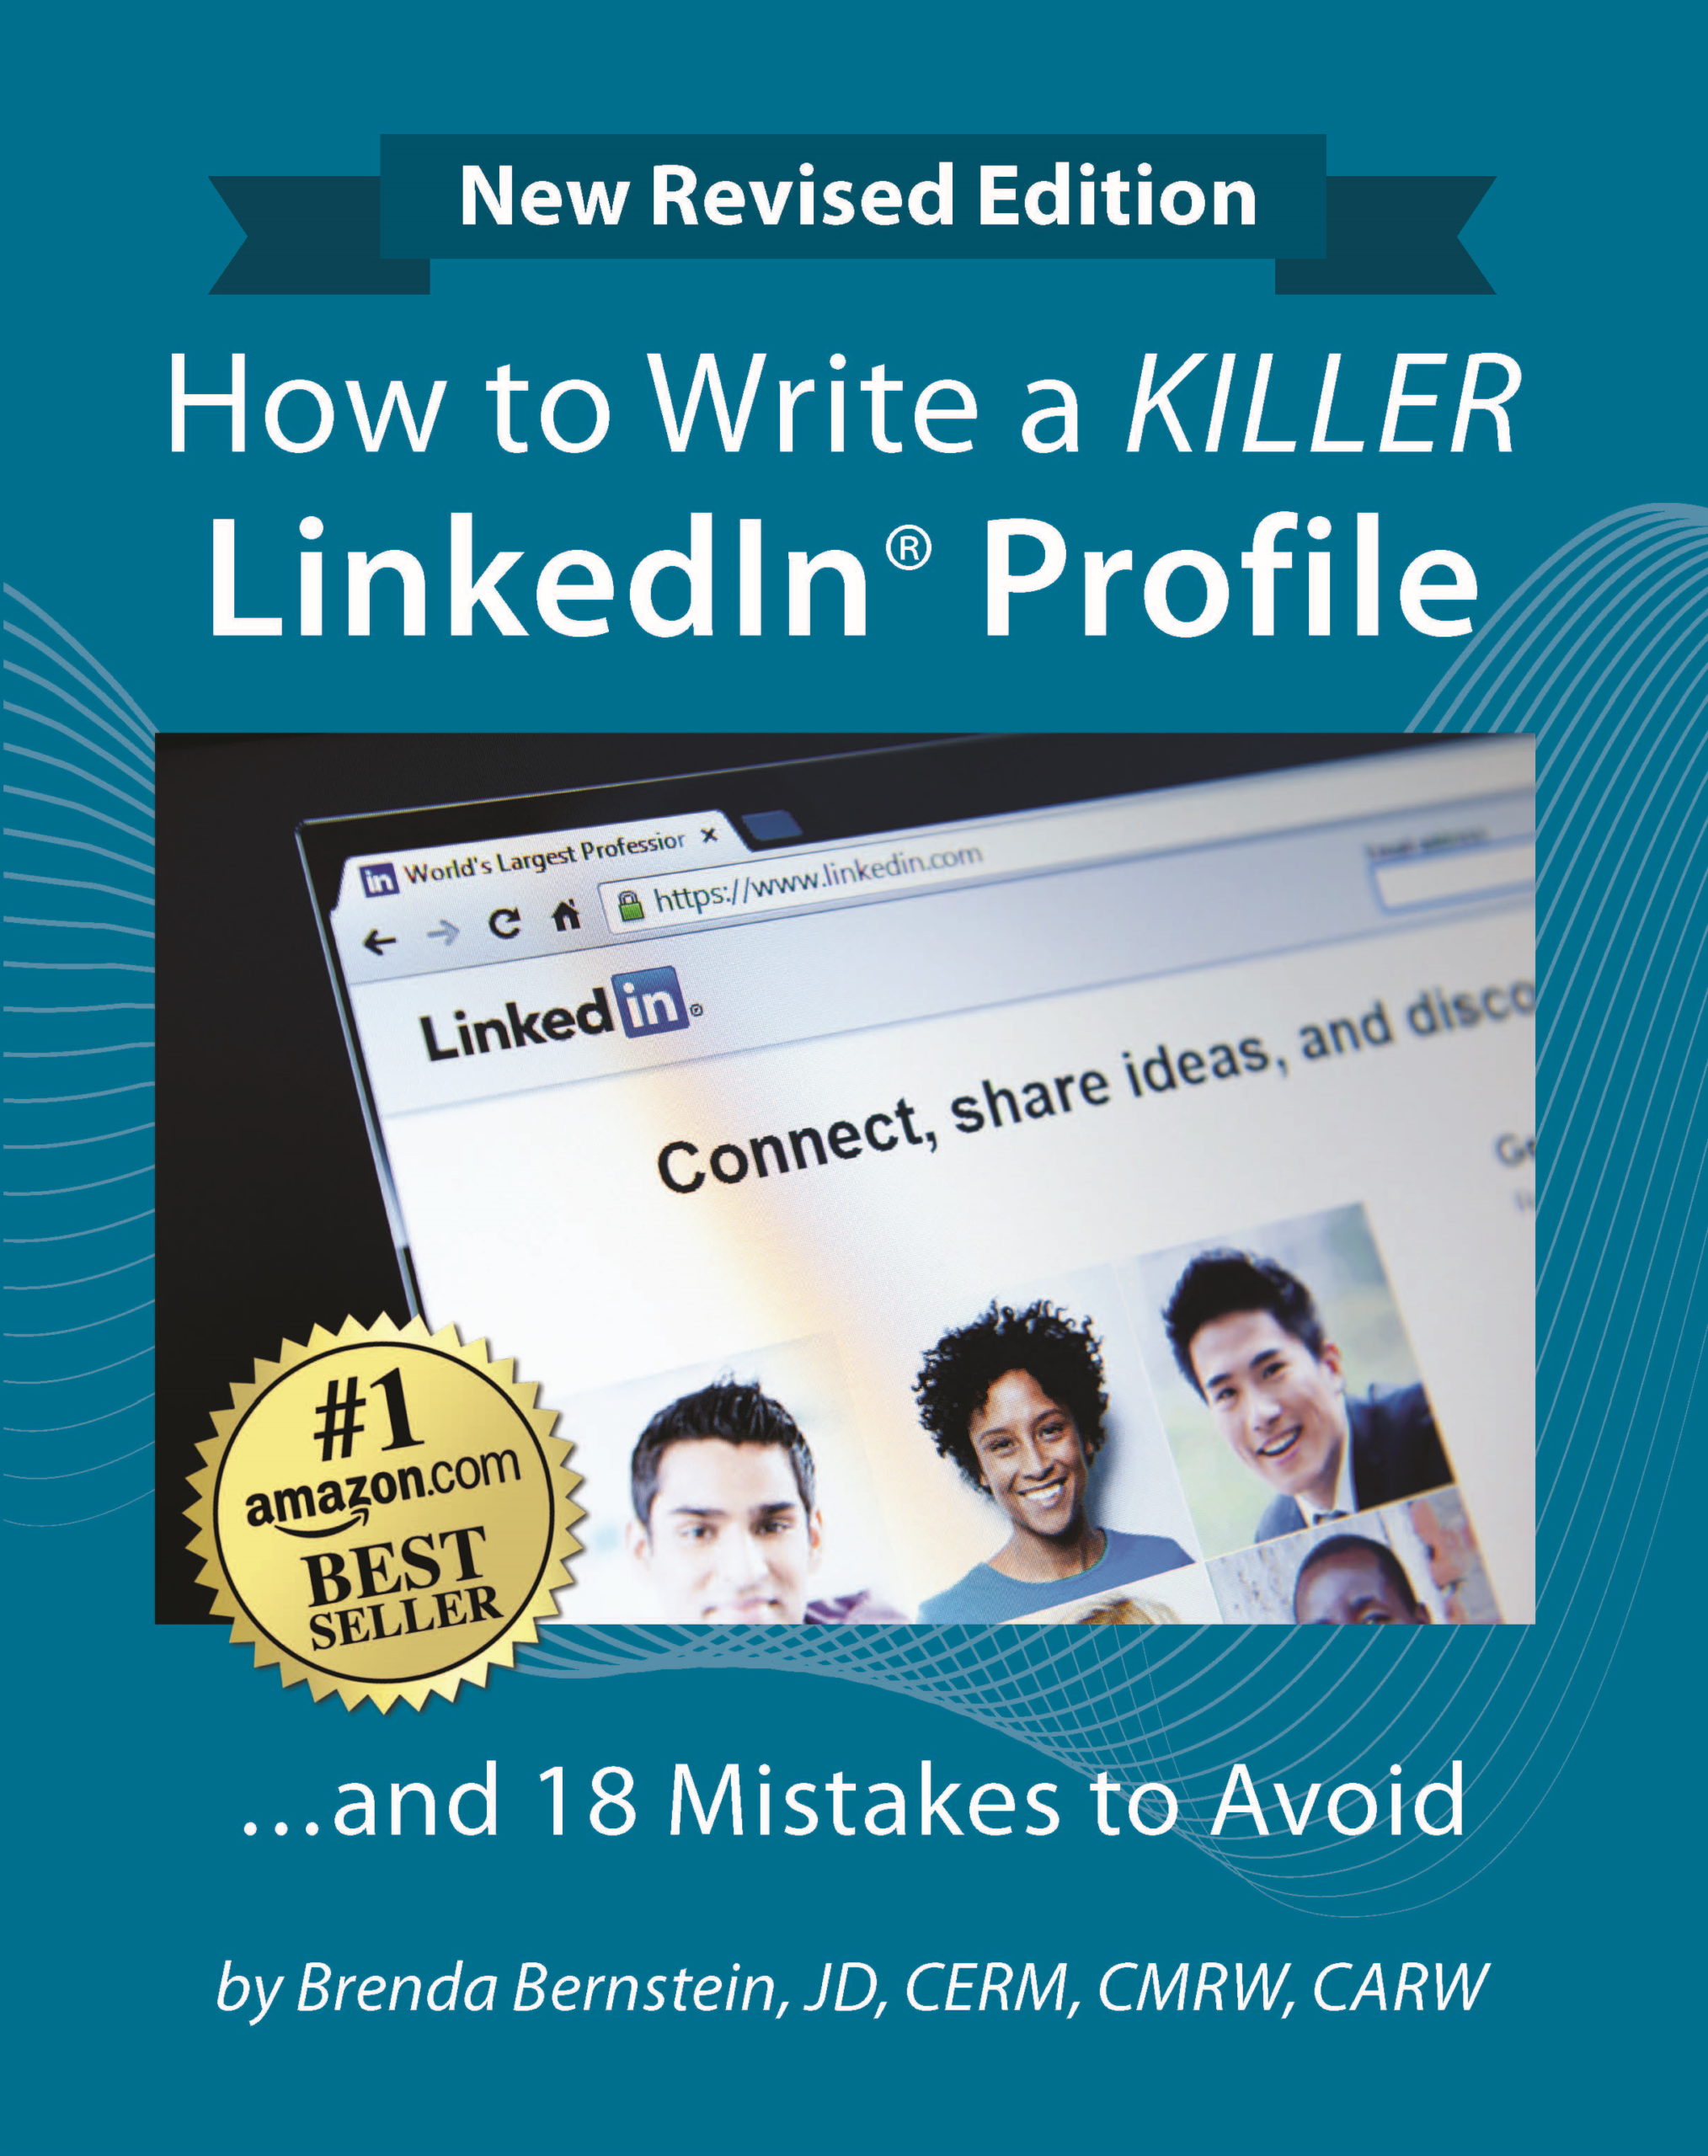 LinkedIn resume tips and help service - How to Write a KILLER LinkedIn Profile book